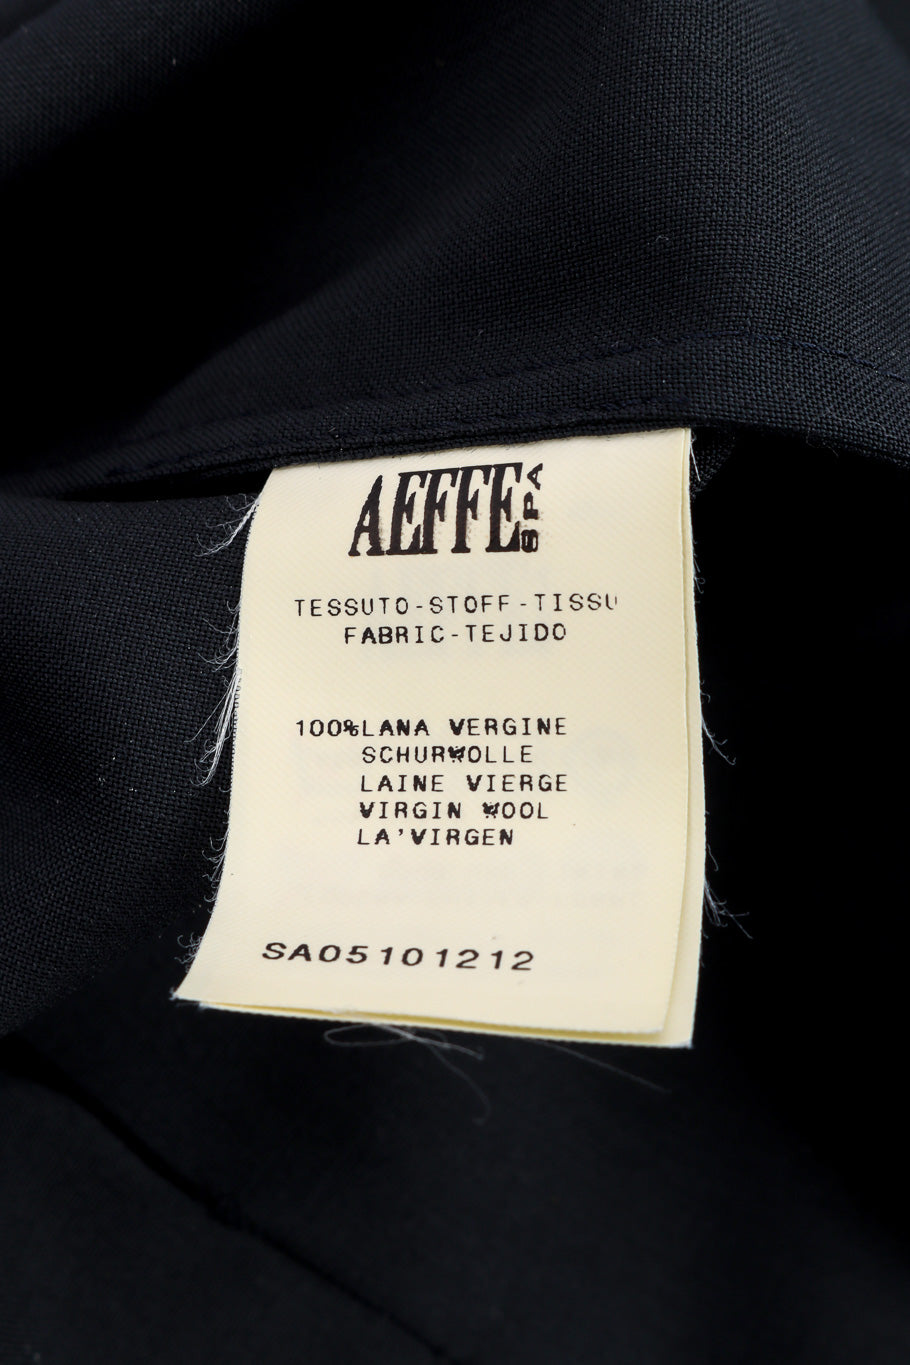 2005 S/S Pleated Drawstring Blazer by Jean Paul Gaultier fabric tag @recessla